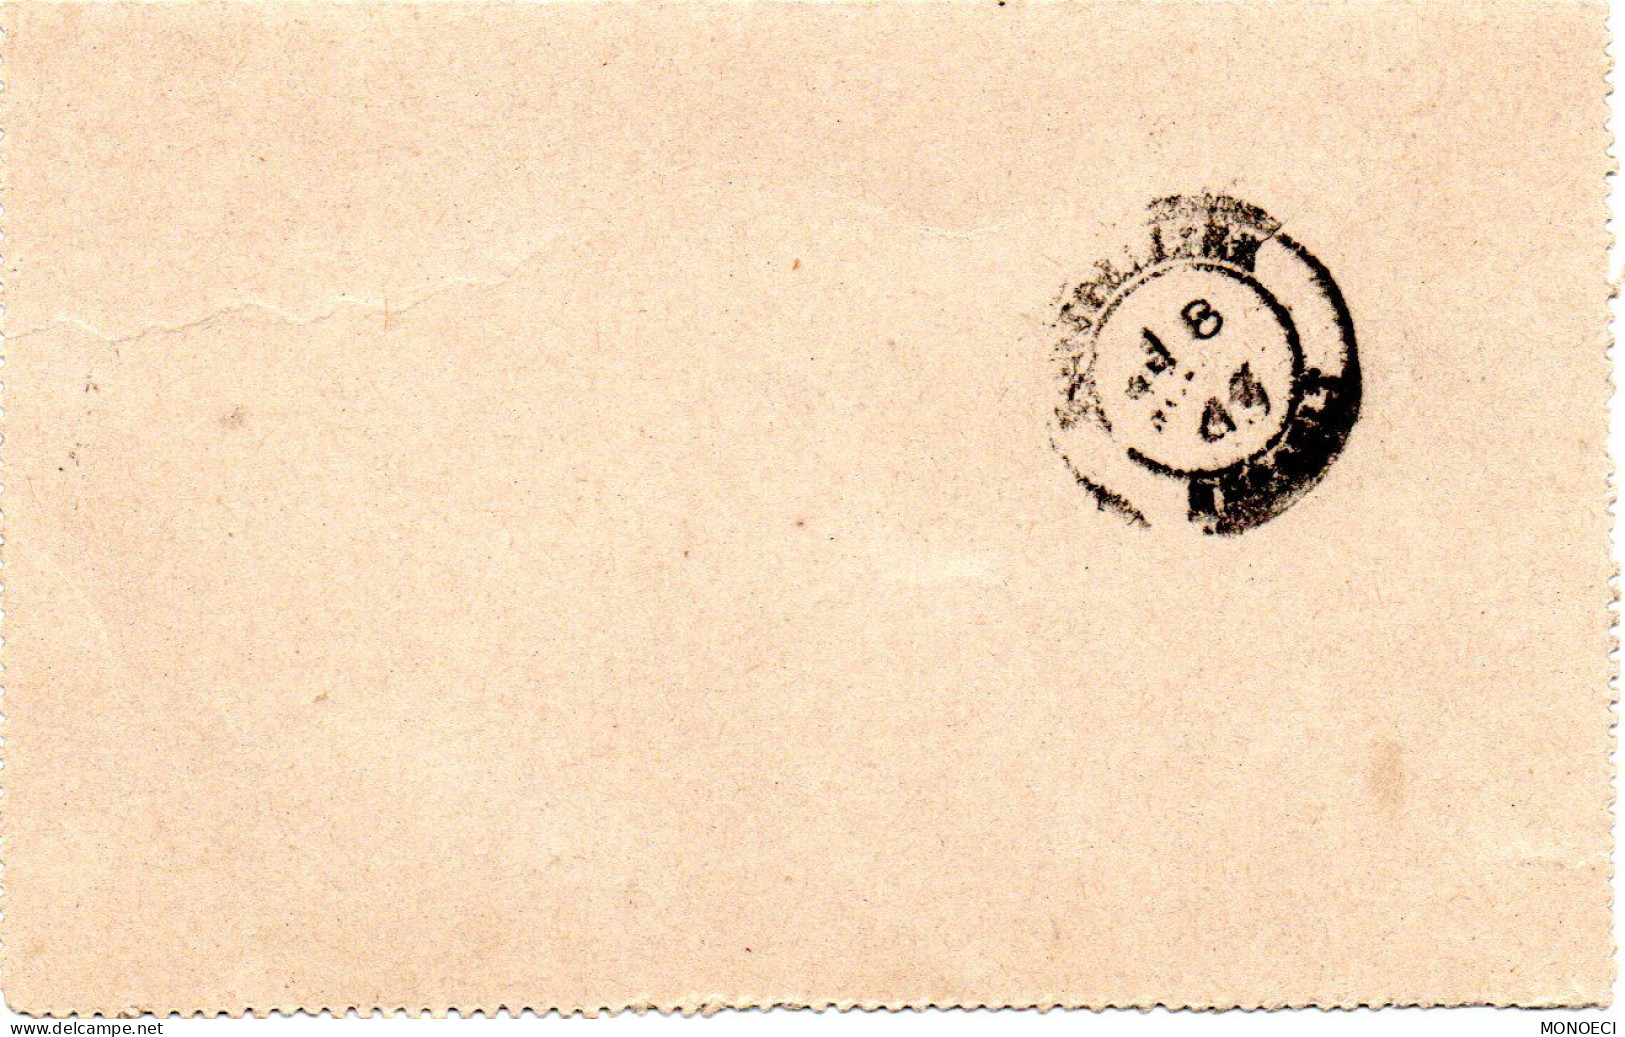 MONACO -- MONTE CARLO -- Entier Postal -- Carte Lettre -- Prince Albert 1er -- 10 C. Carmin Sur Gris (1891) - Postal Stationery